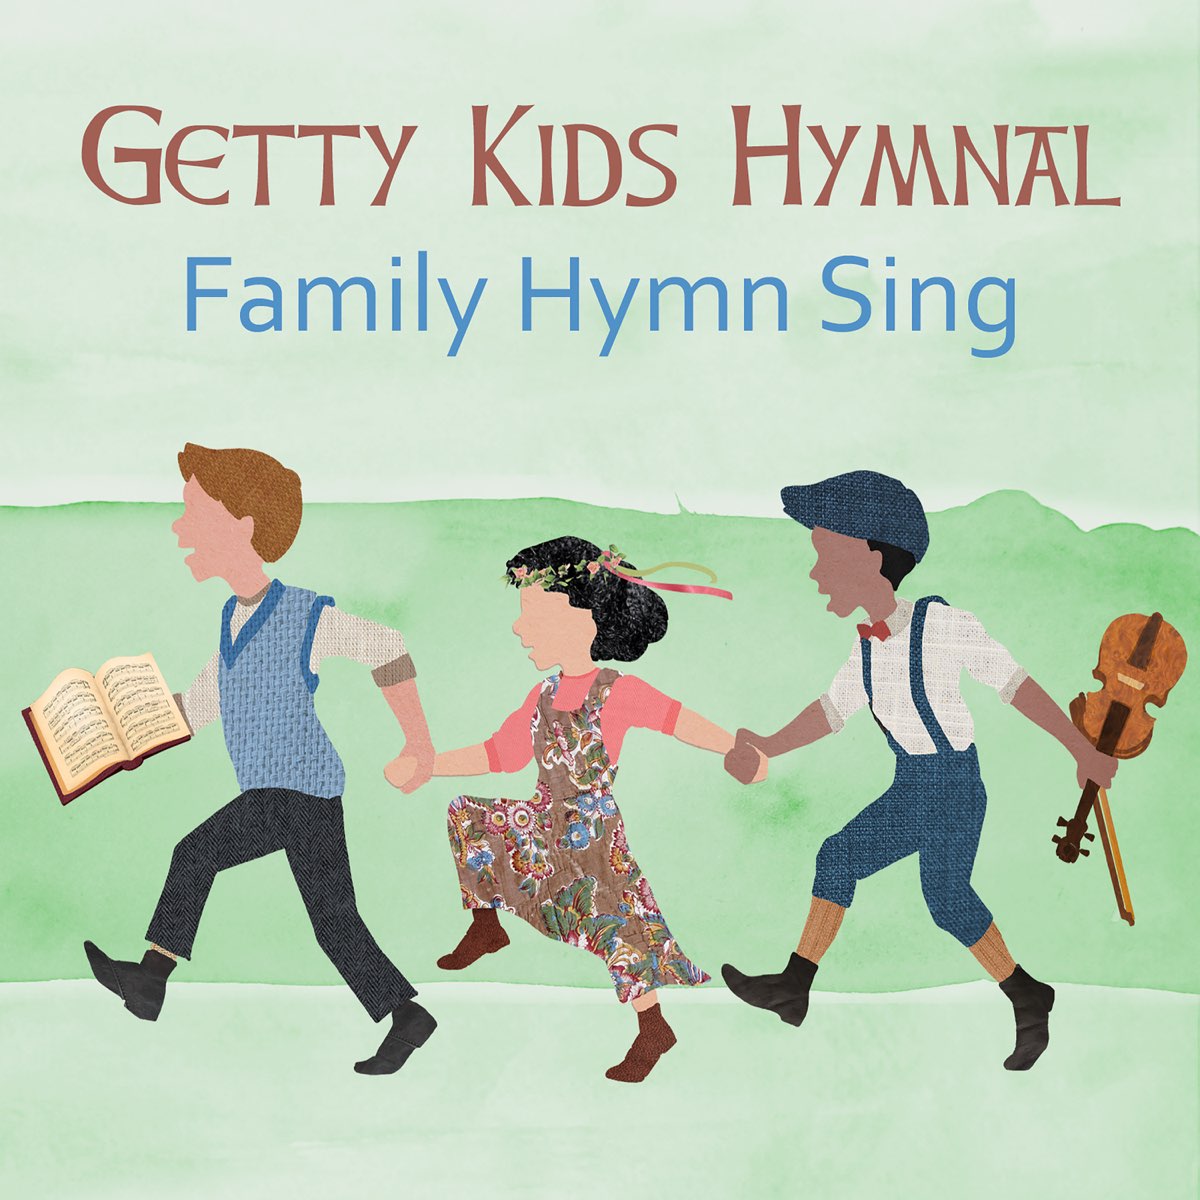 Getty Kaspers - Getty's album. Family sing